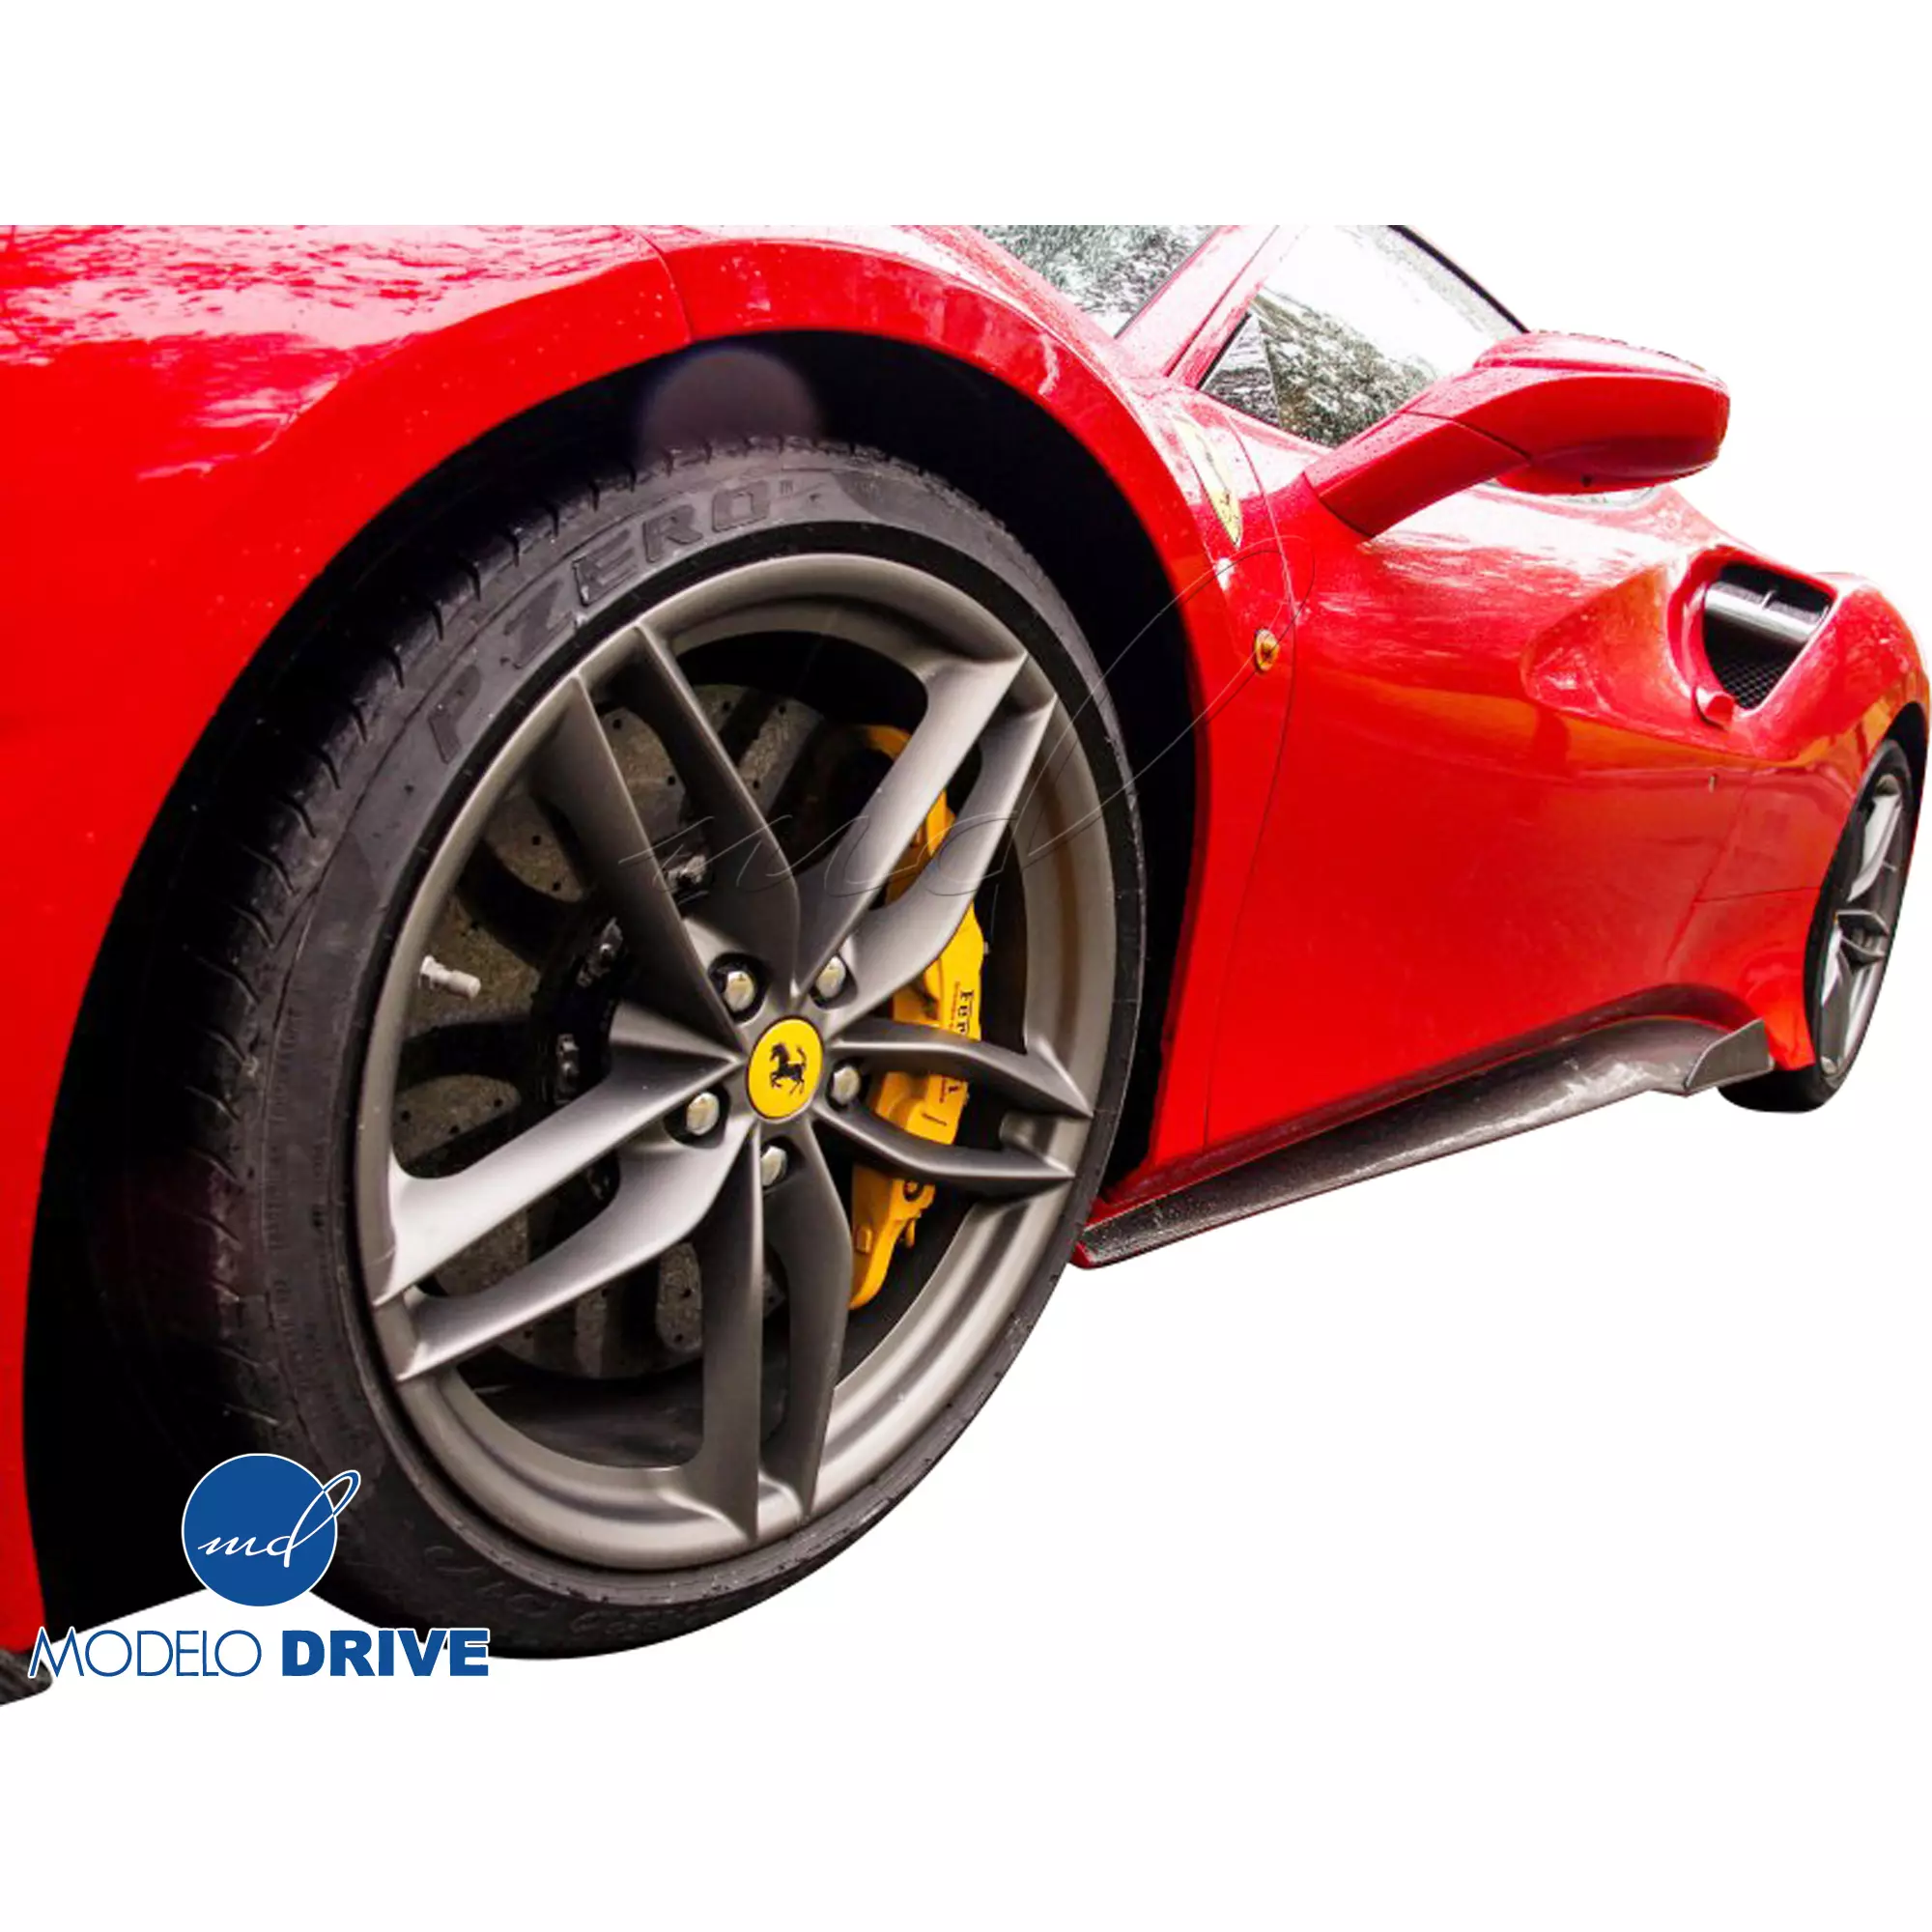 ModeloDrive Partial Carbon Fiber MDES Body Kit > Ferrari 488 GTB F142M 2016-2019 - Image 24